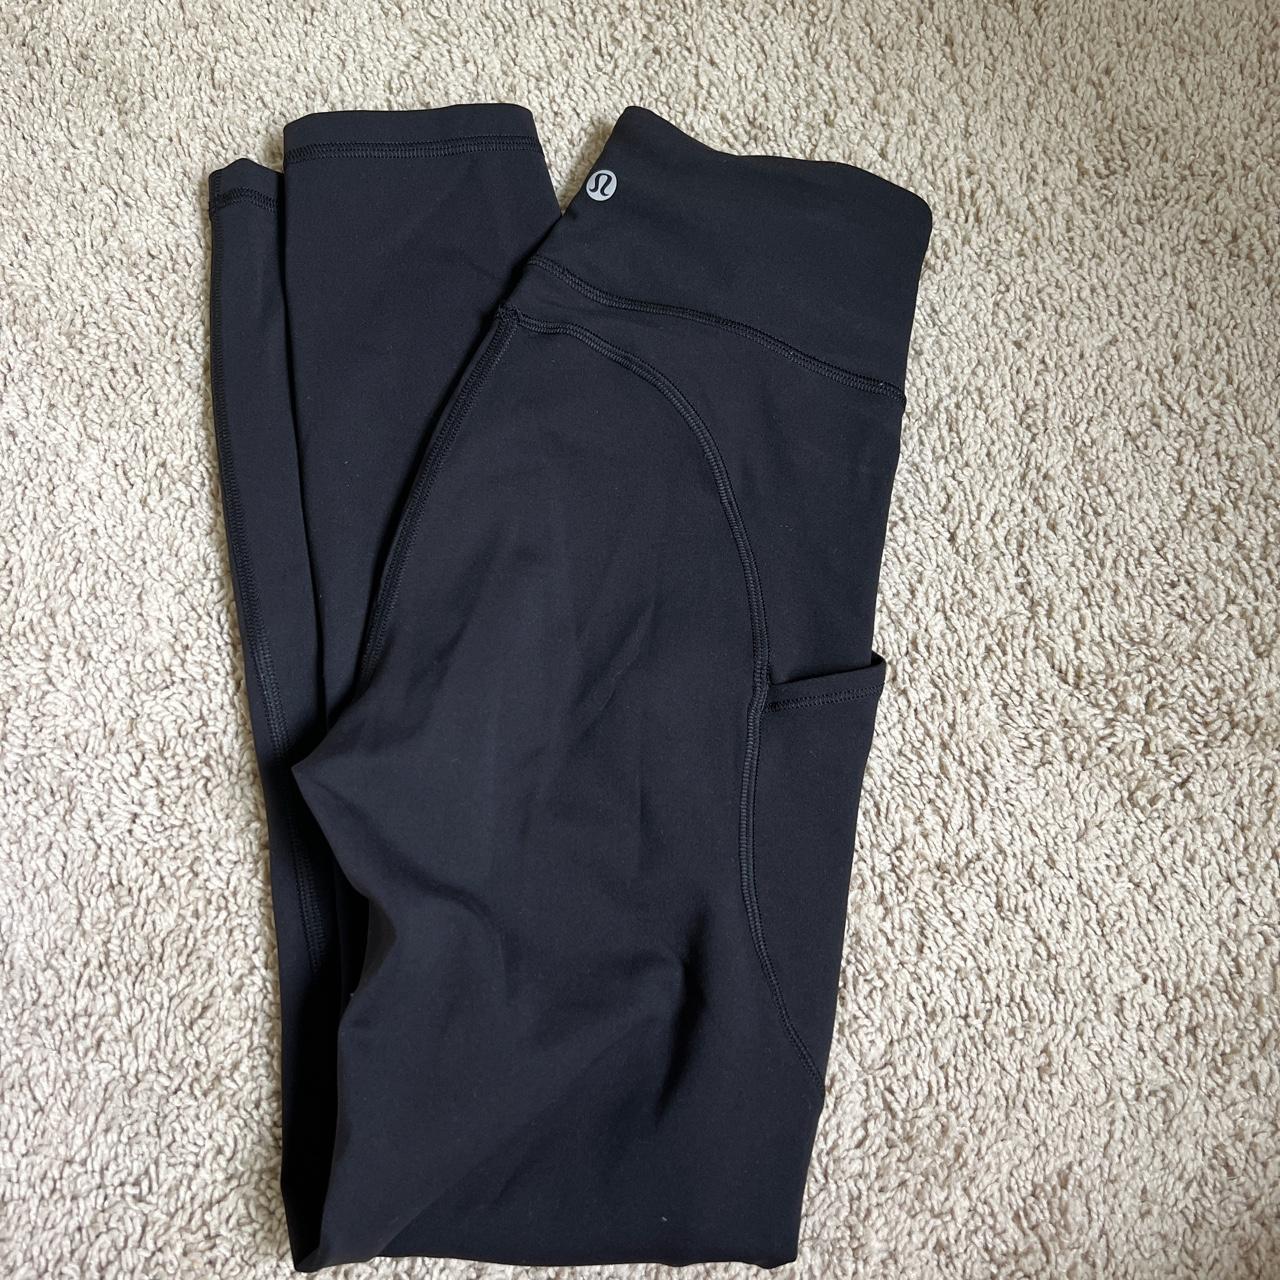 Black lululemon leggings with pockets